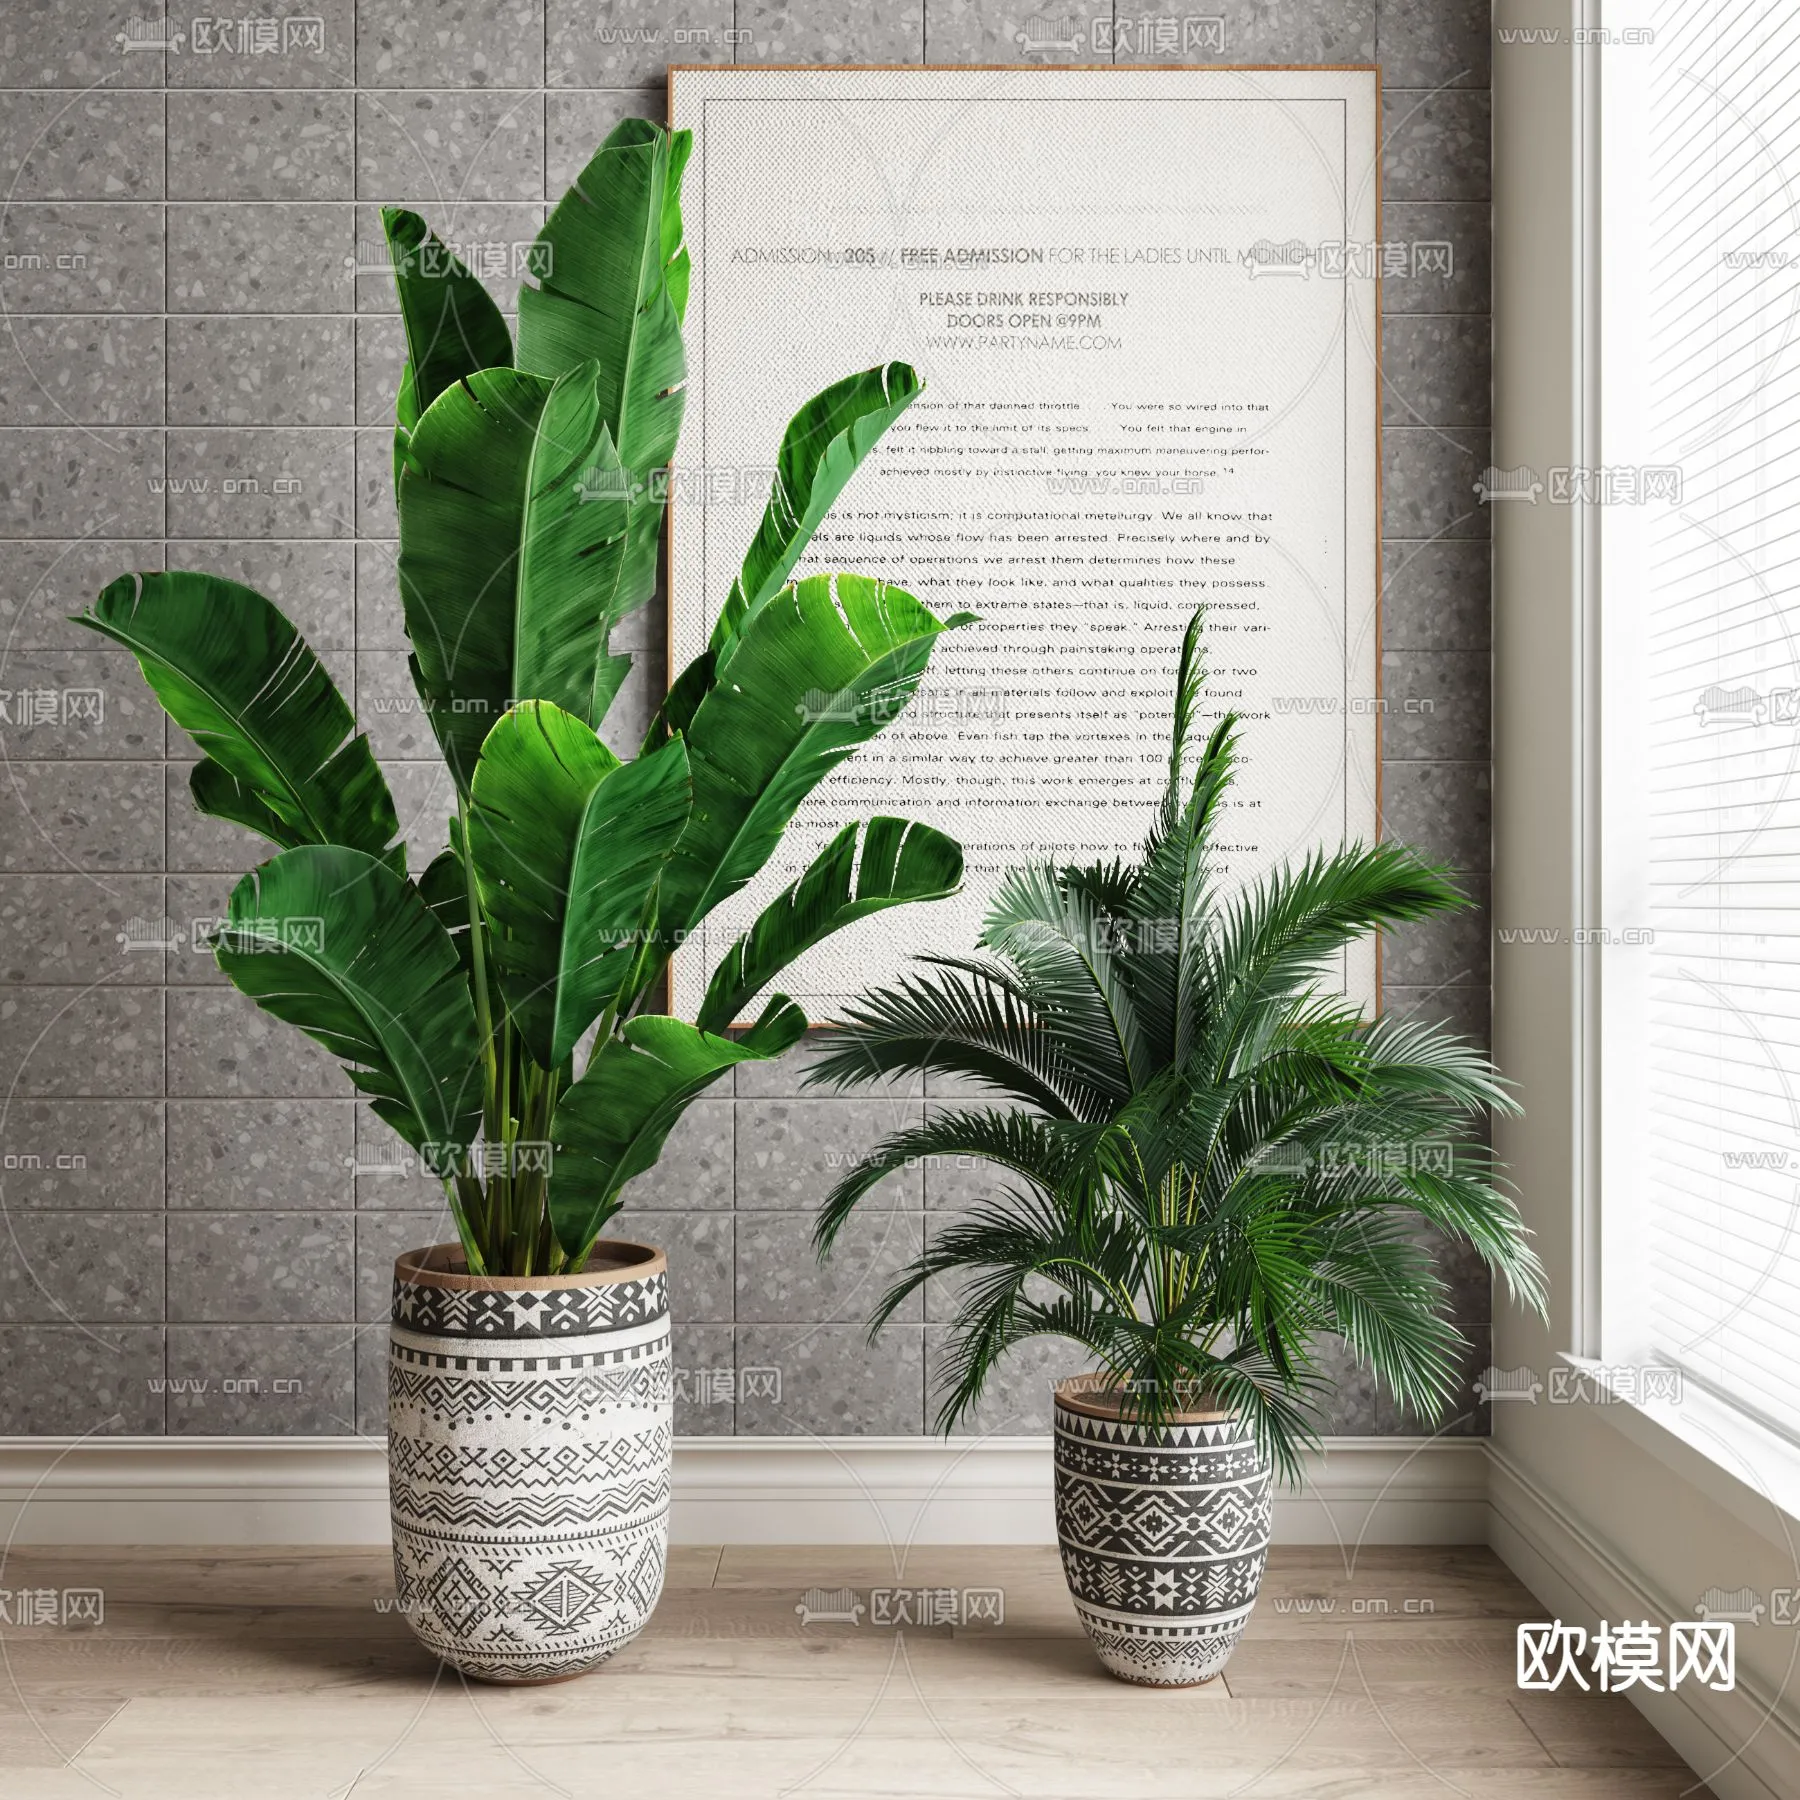 Plant – VRAY / CORONA – 3D MODEL – 493